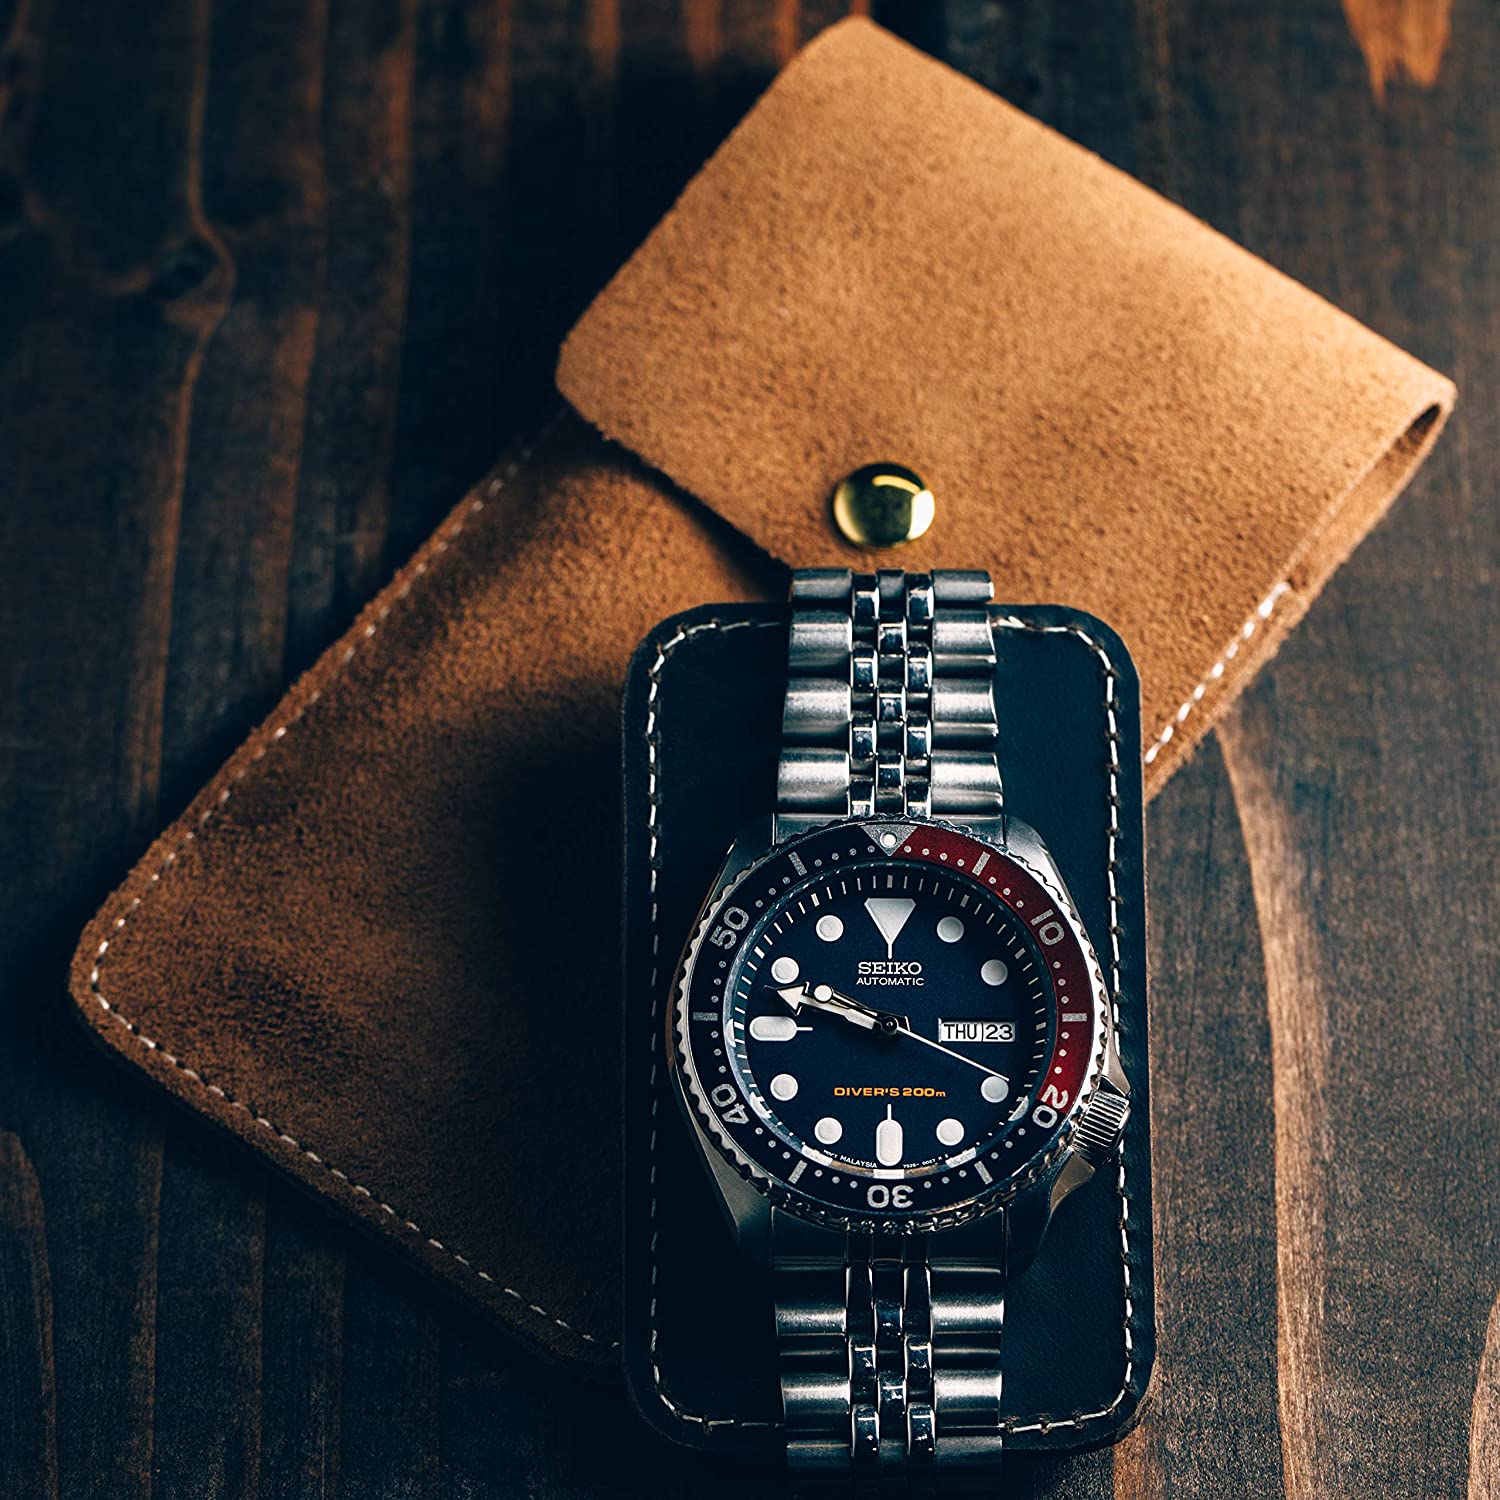 Watch Storage Boxes | Luxury Watch Box | Watch Box for Men